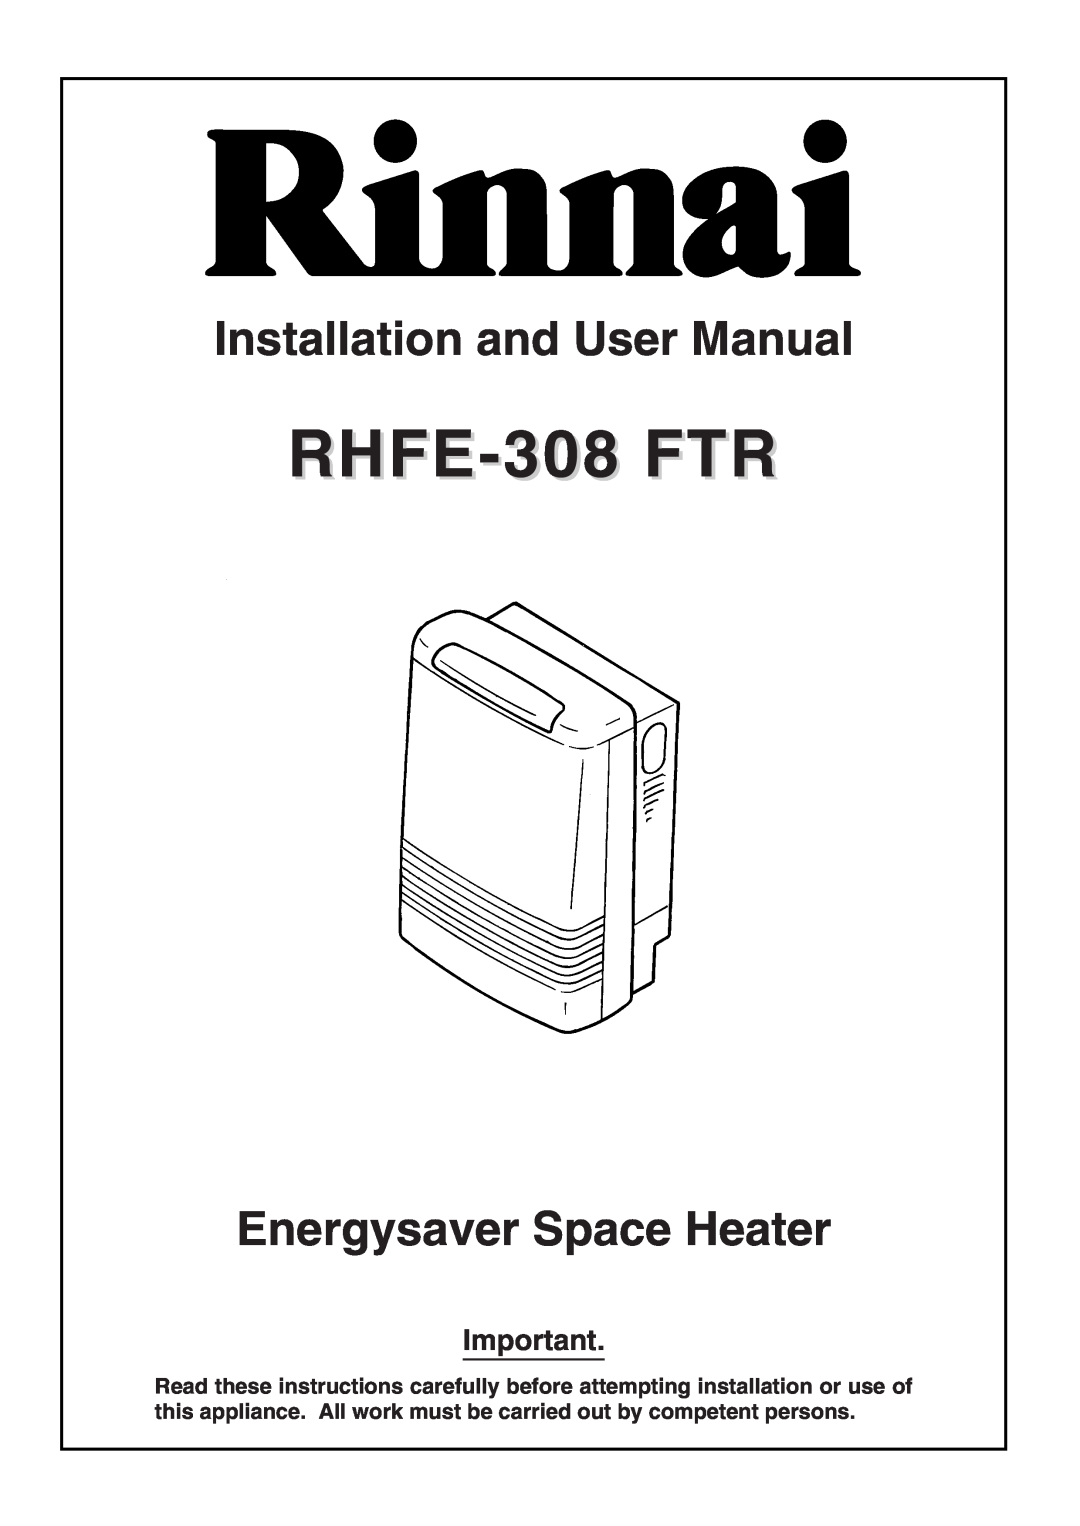 Rinnai RHFE-308 FTR user manual RHFE-308FTR, Energysaver Space Heater 